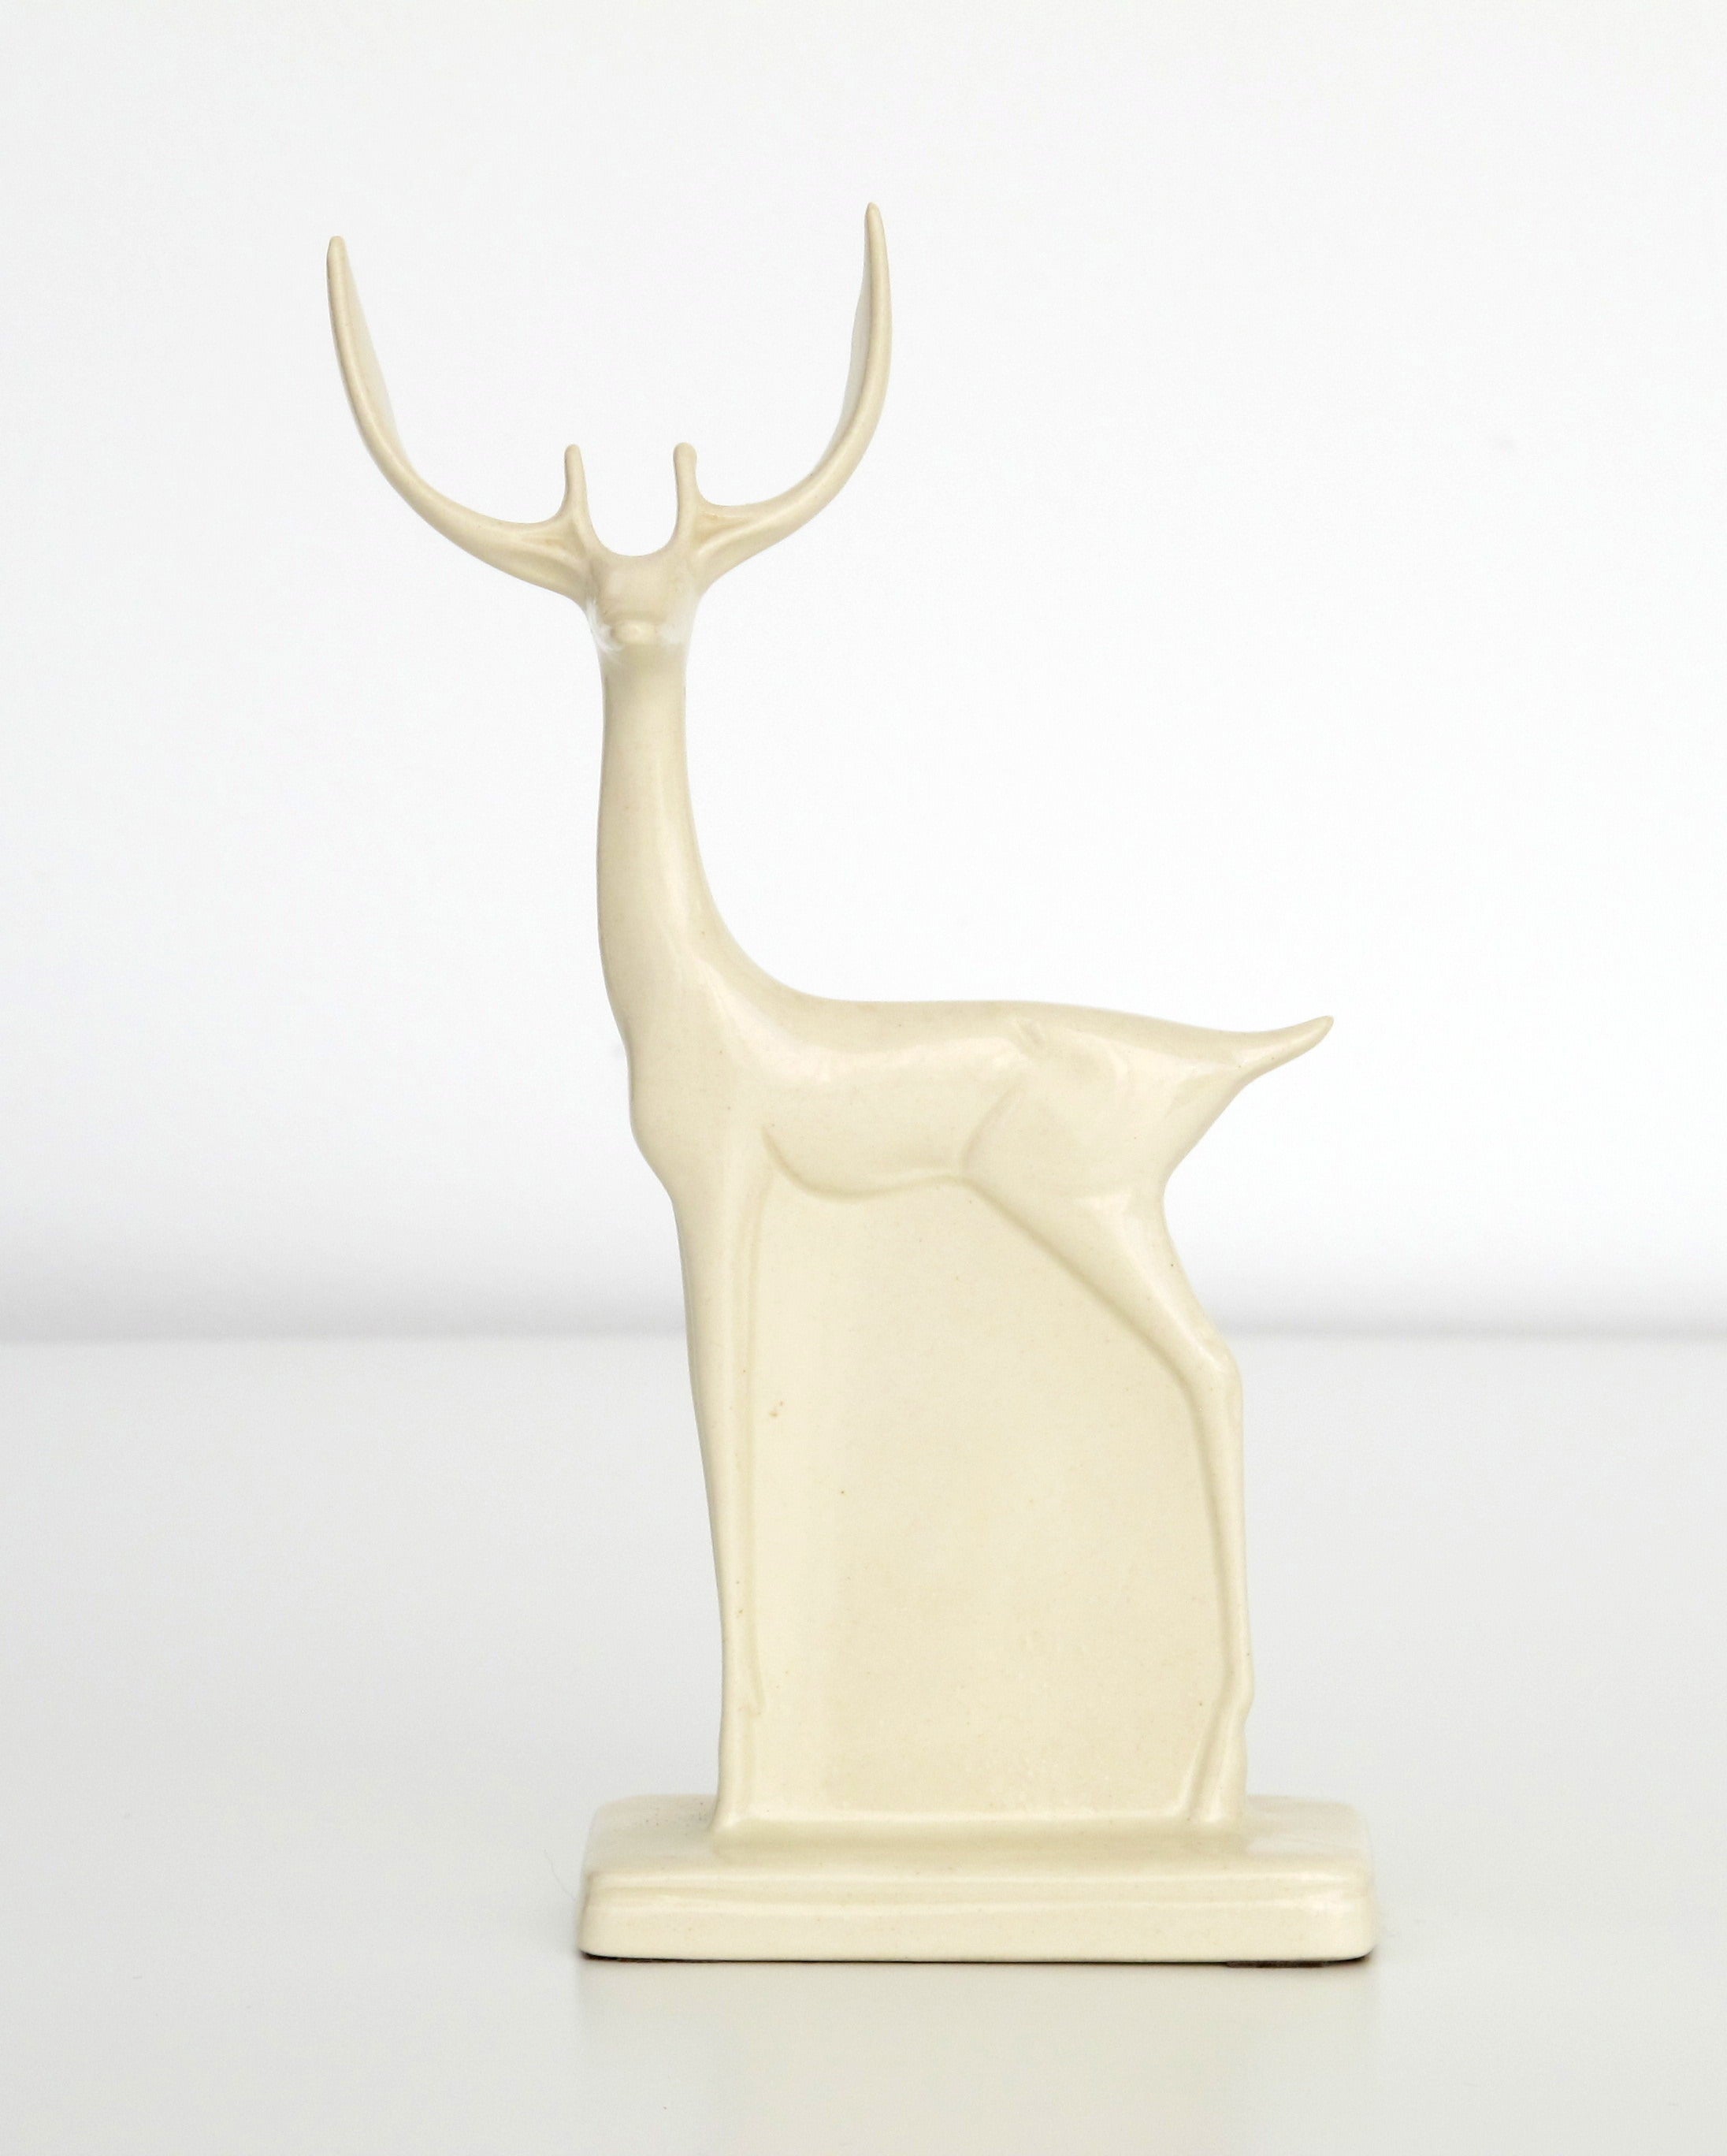 Chris van der Hoef Ceramic Animal Statue of a Deer, Plateelbakkerij Zuid-Holland